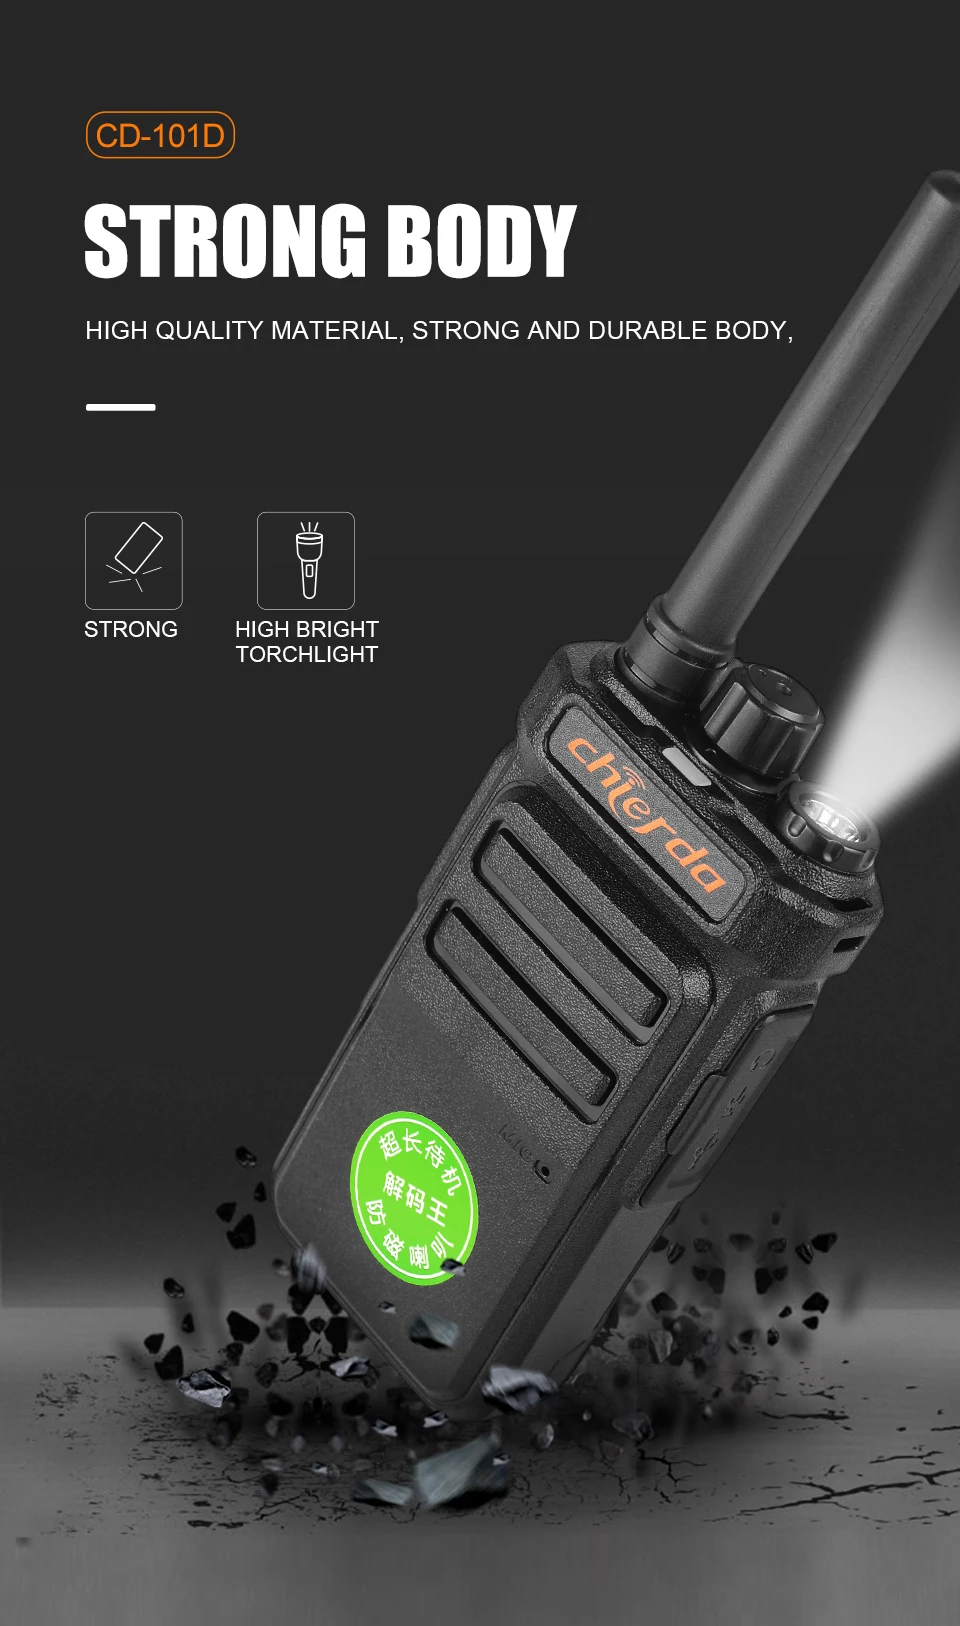 Chierda CD-101P Bluetooth headset Type-c Talkie Walkie Torch Light vhf/uhf radio walkie talkie